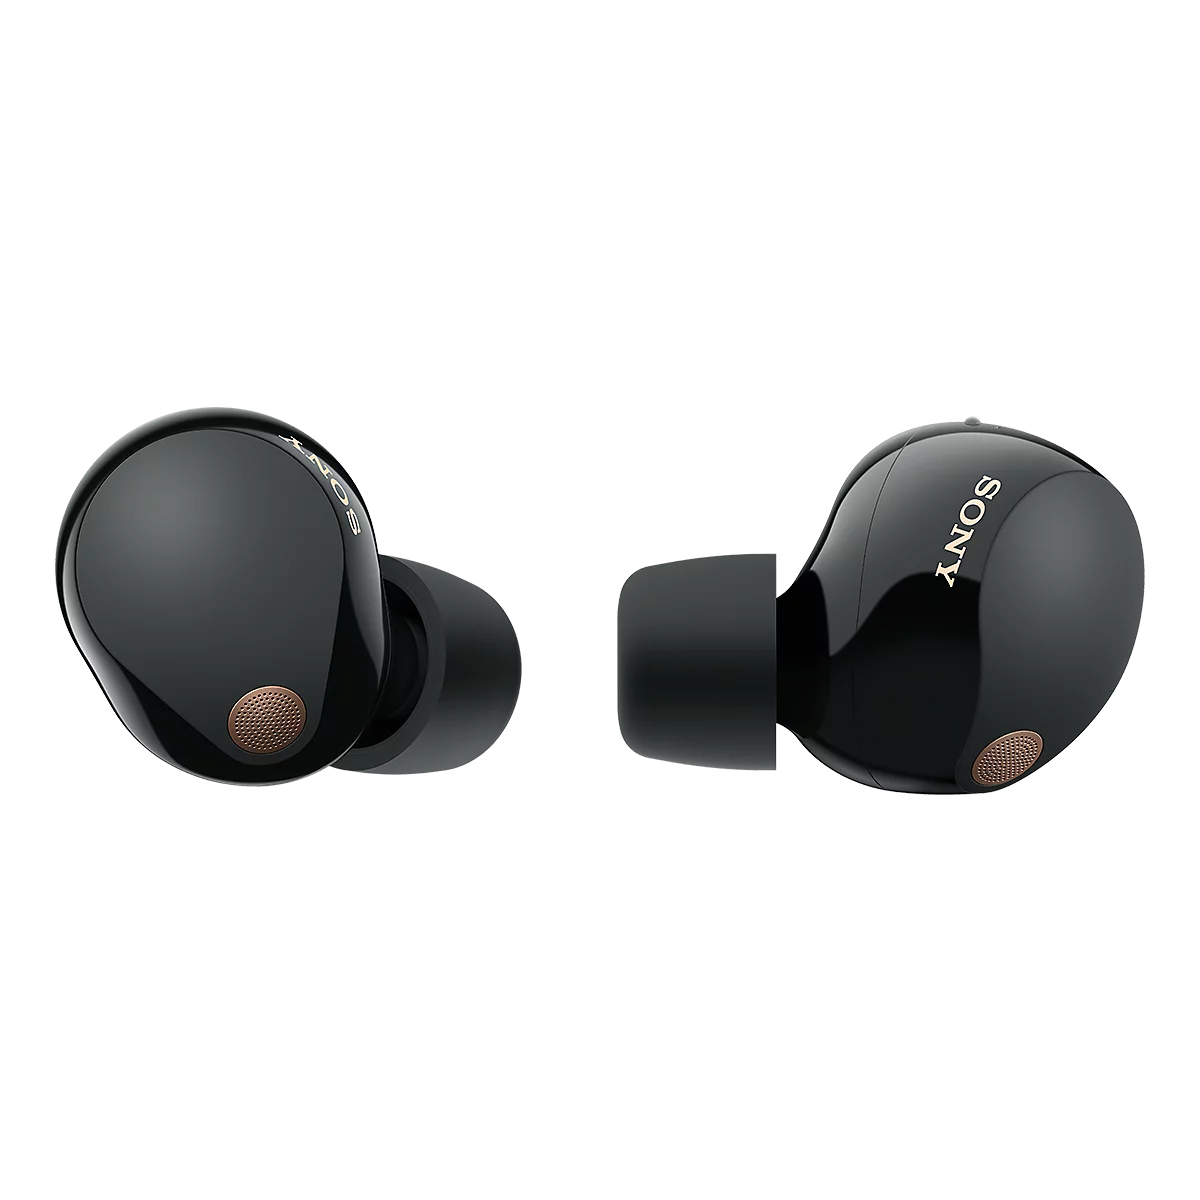 Sony WF-1000XM5 black earbuds render.